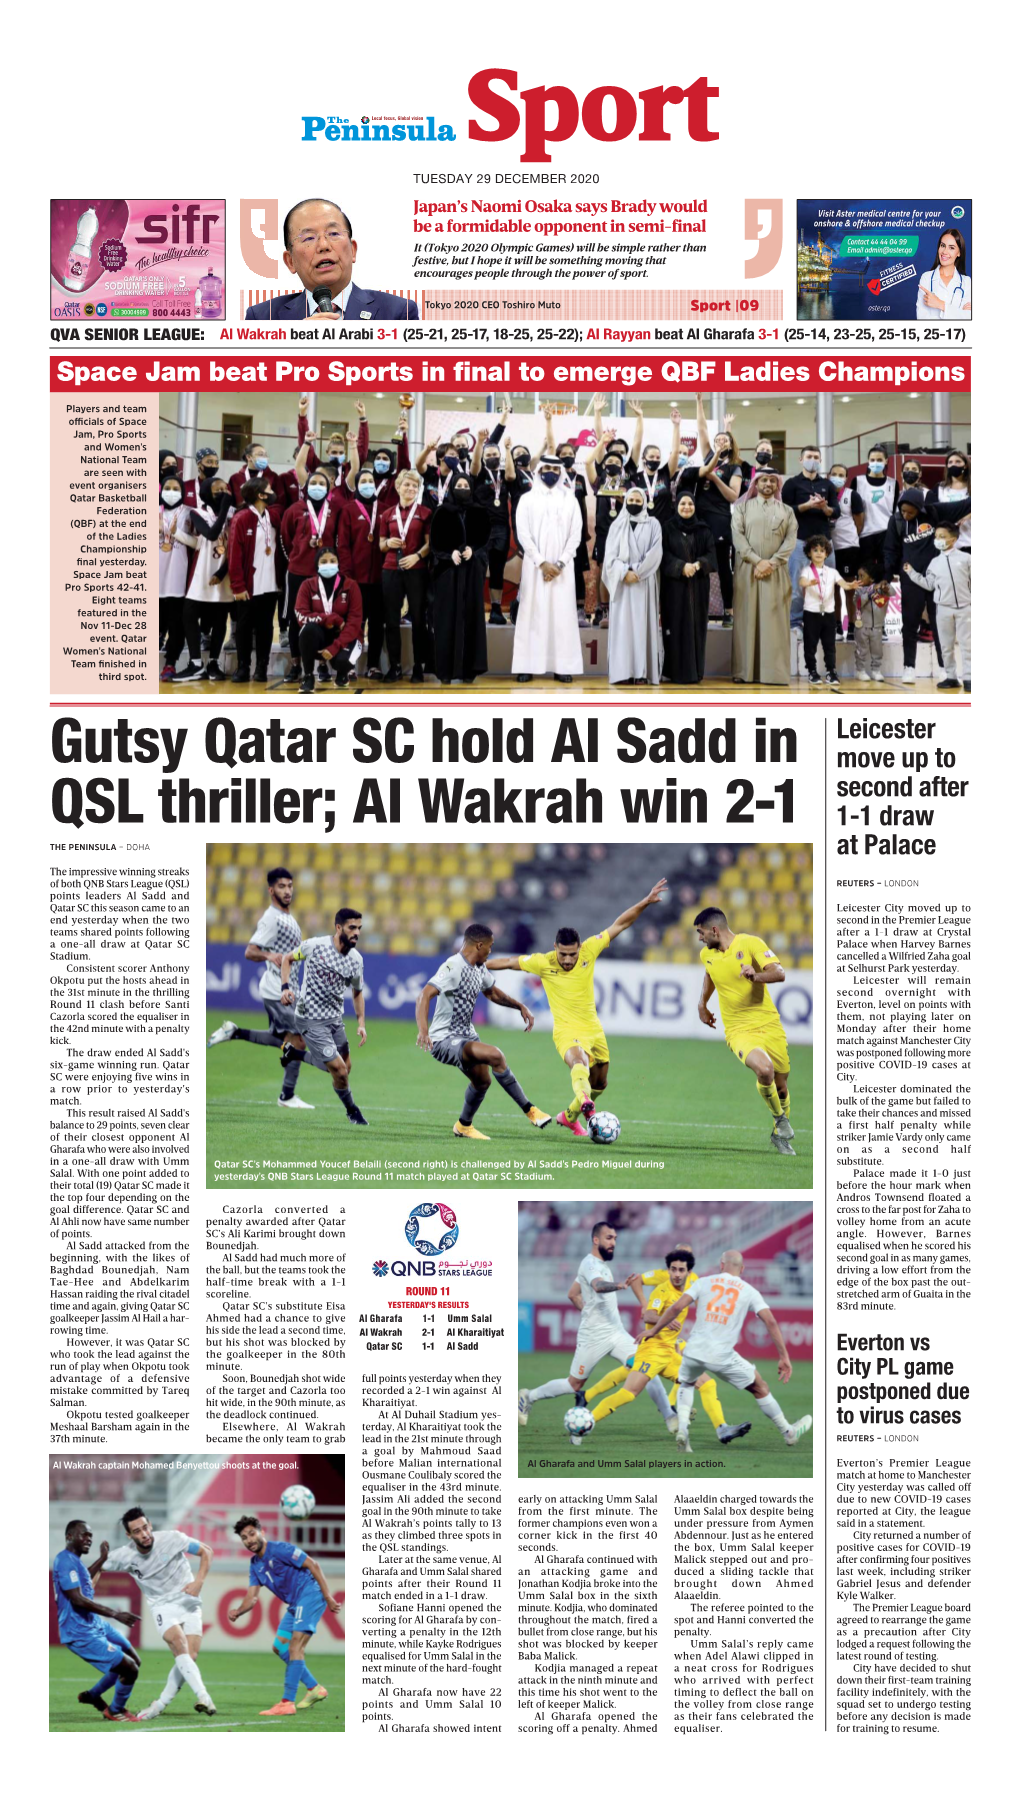 Gutsy Qatar SC Hold Al Sadd in QSL Thriller; Al Wakrah Win